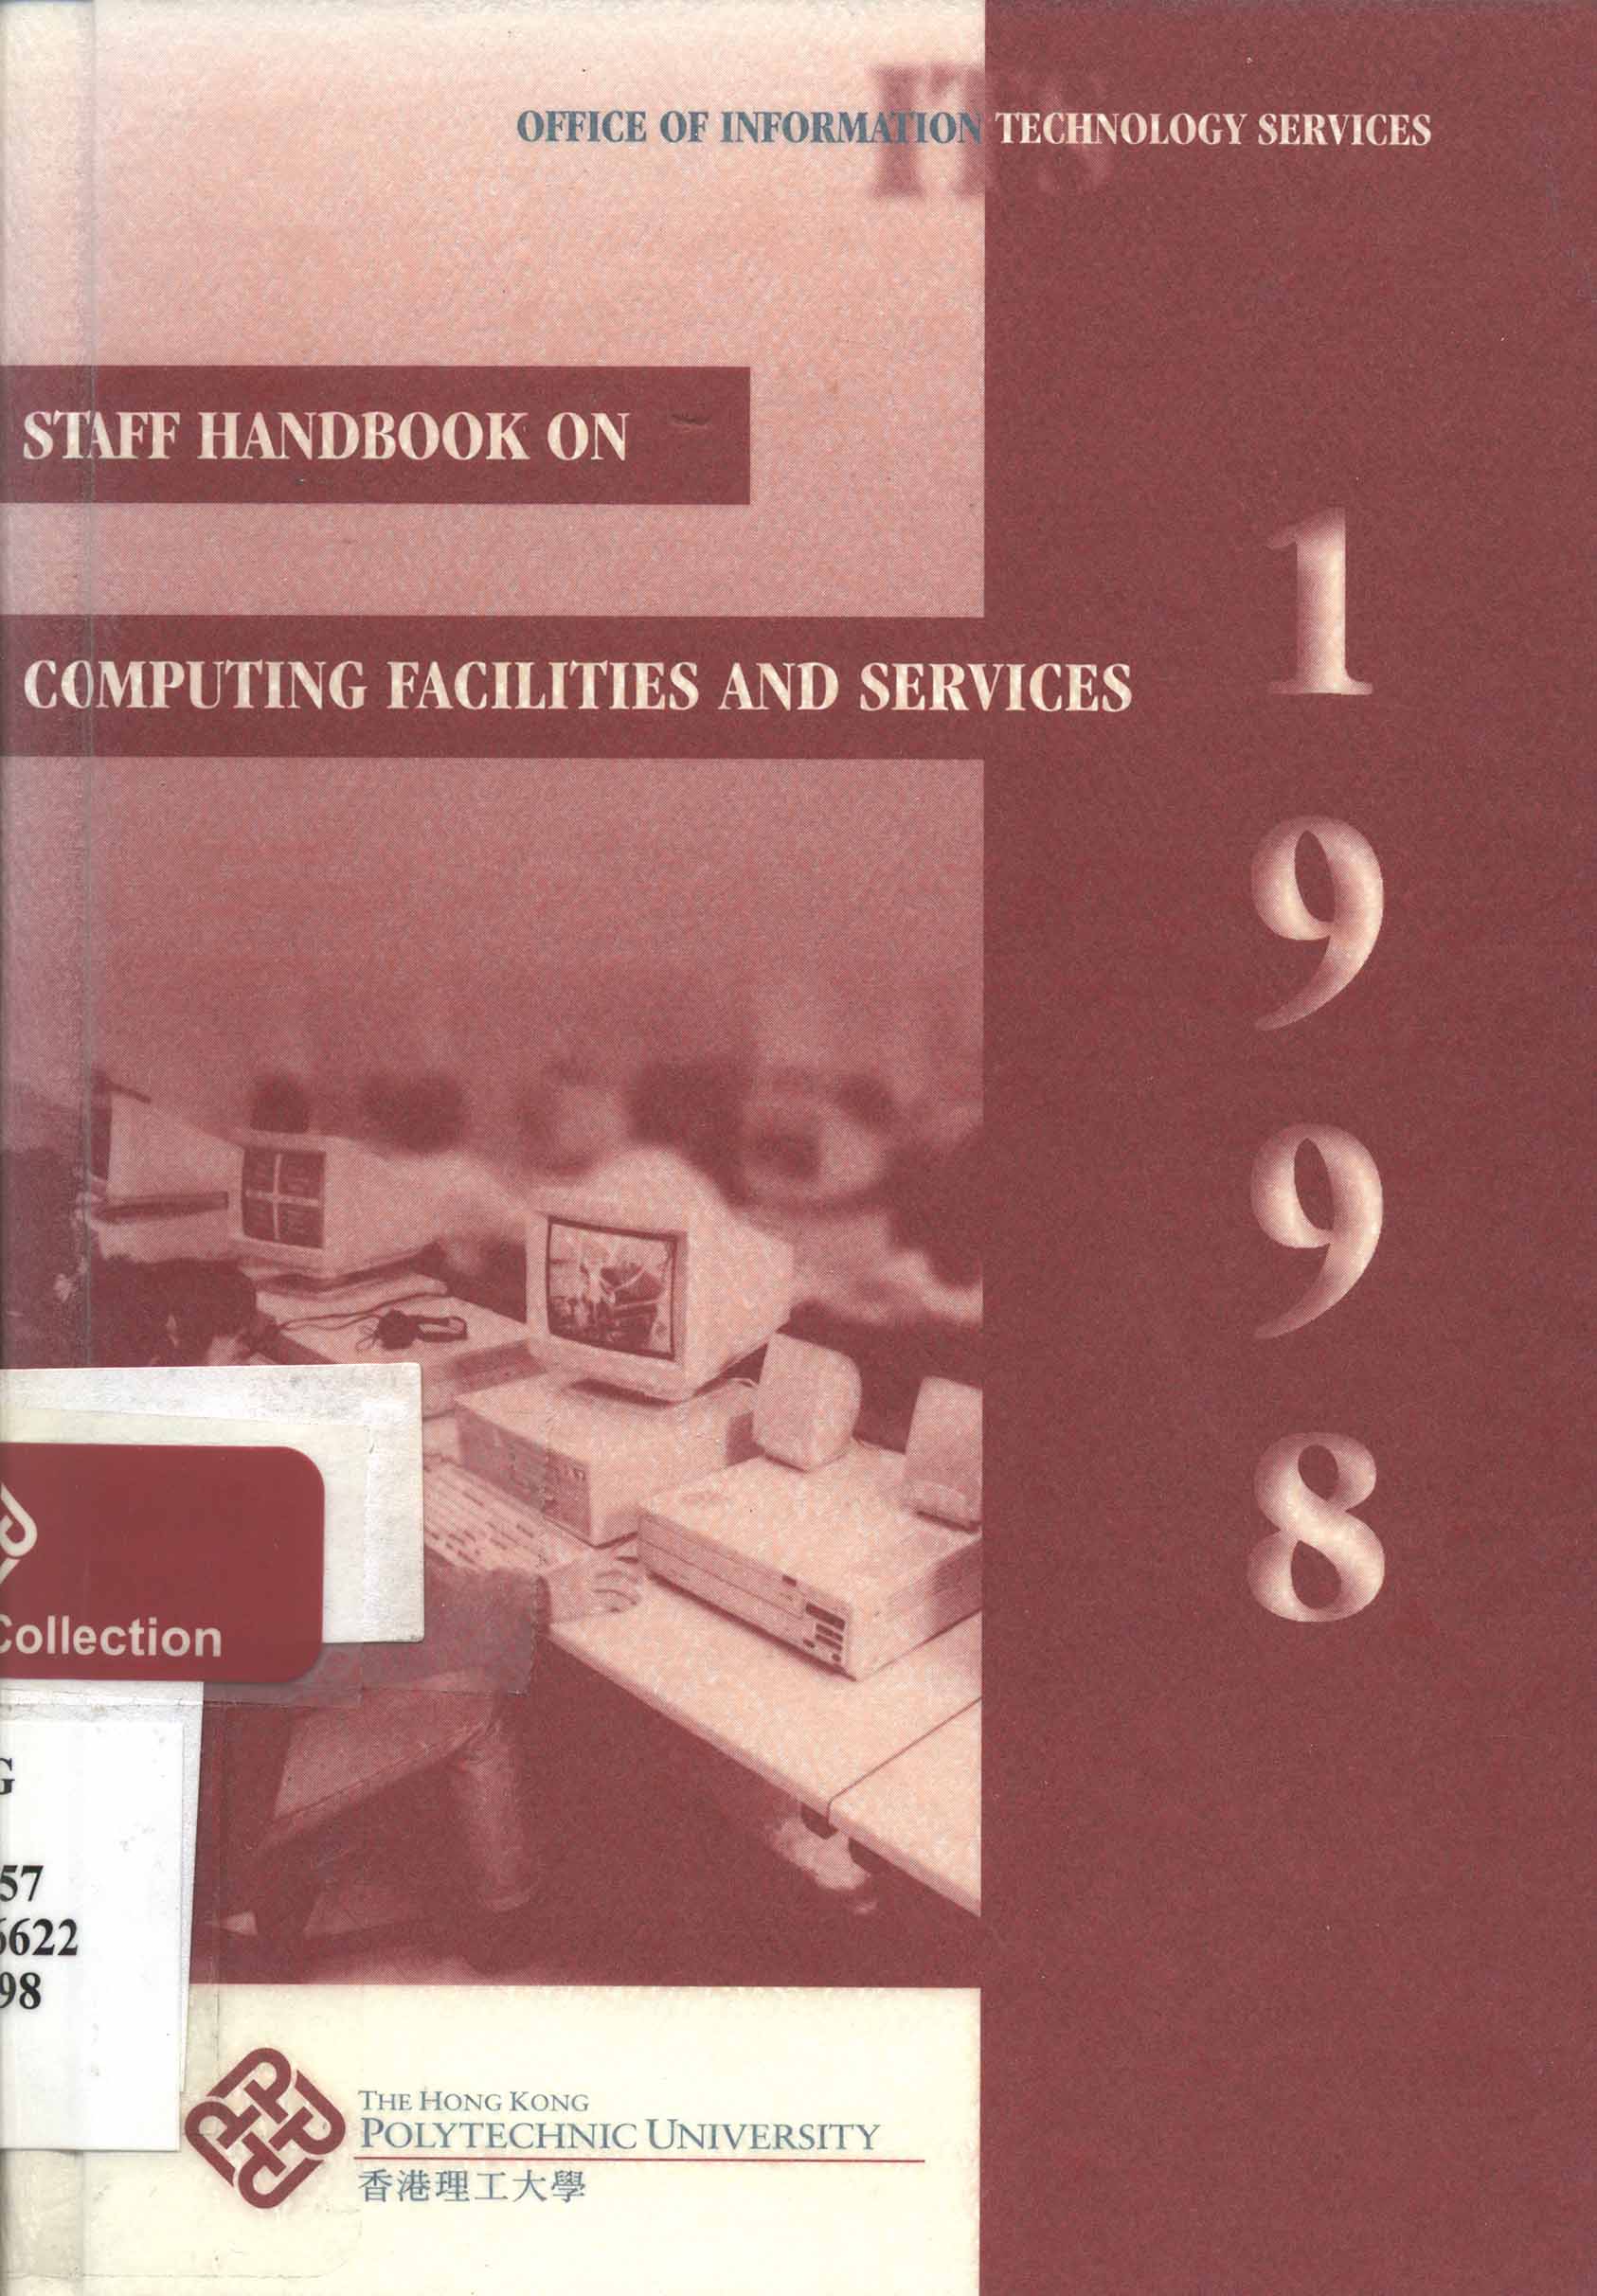 Staff handbook on computing facilities and services [1998]